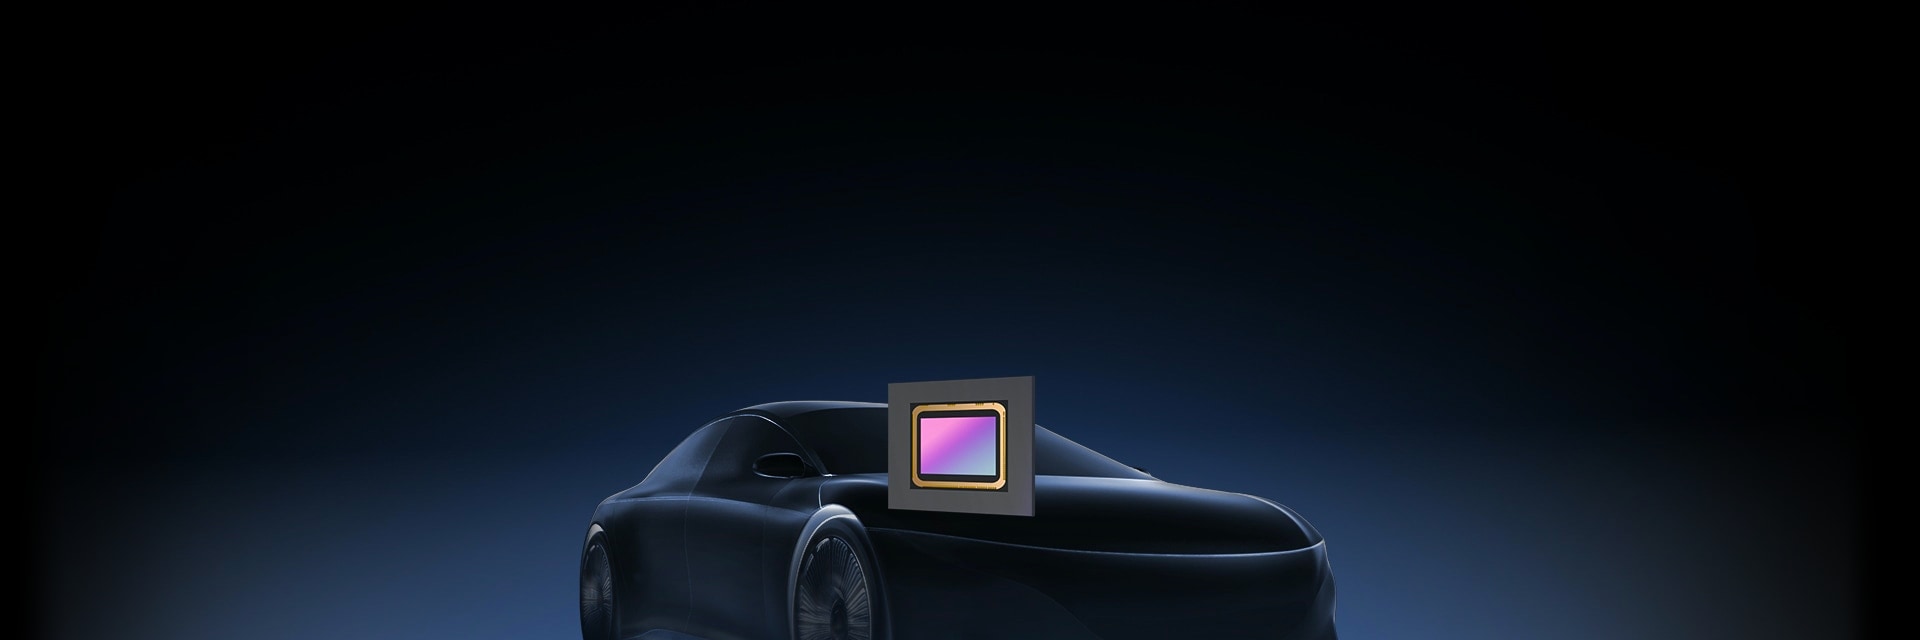 Samsung Semiconductor Automotive Image Sensor, Smart Detection for Smart Driving